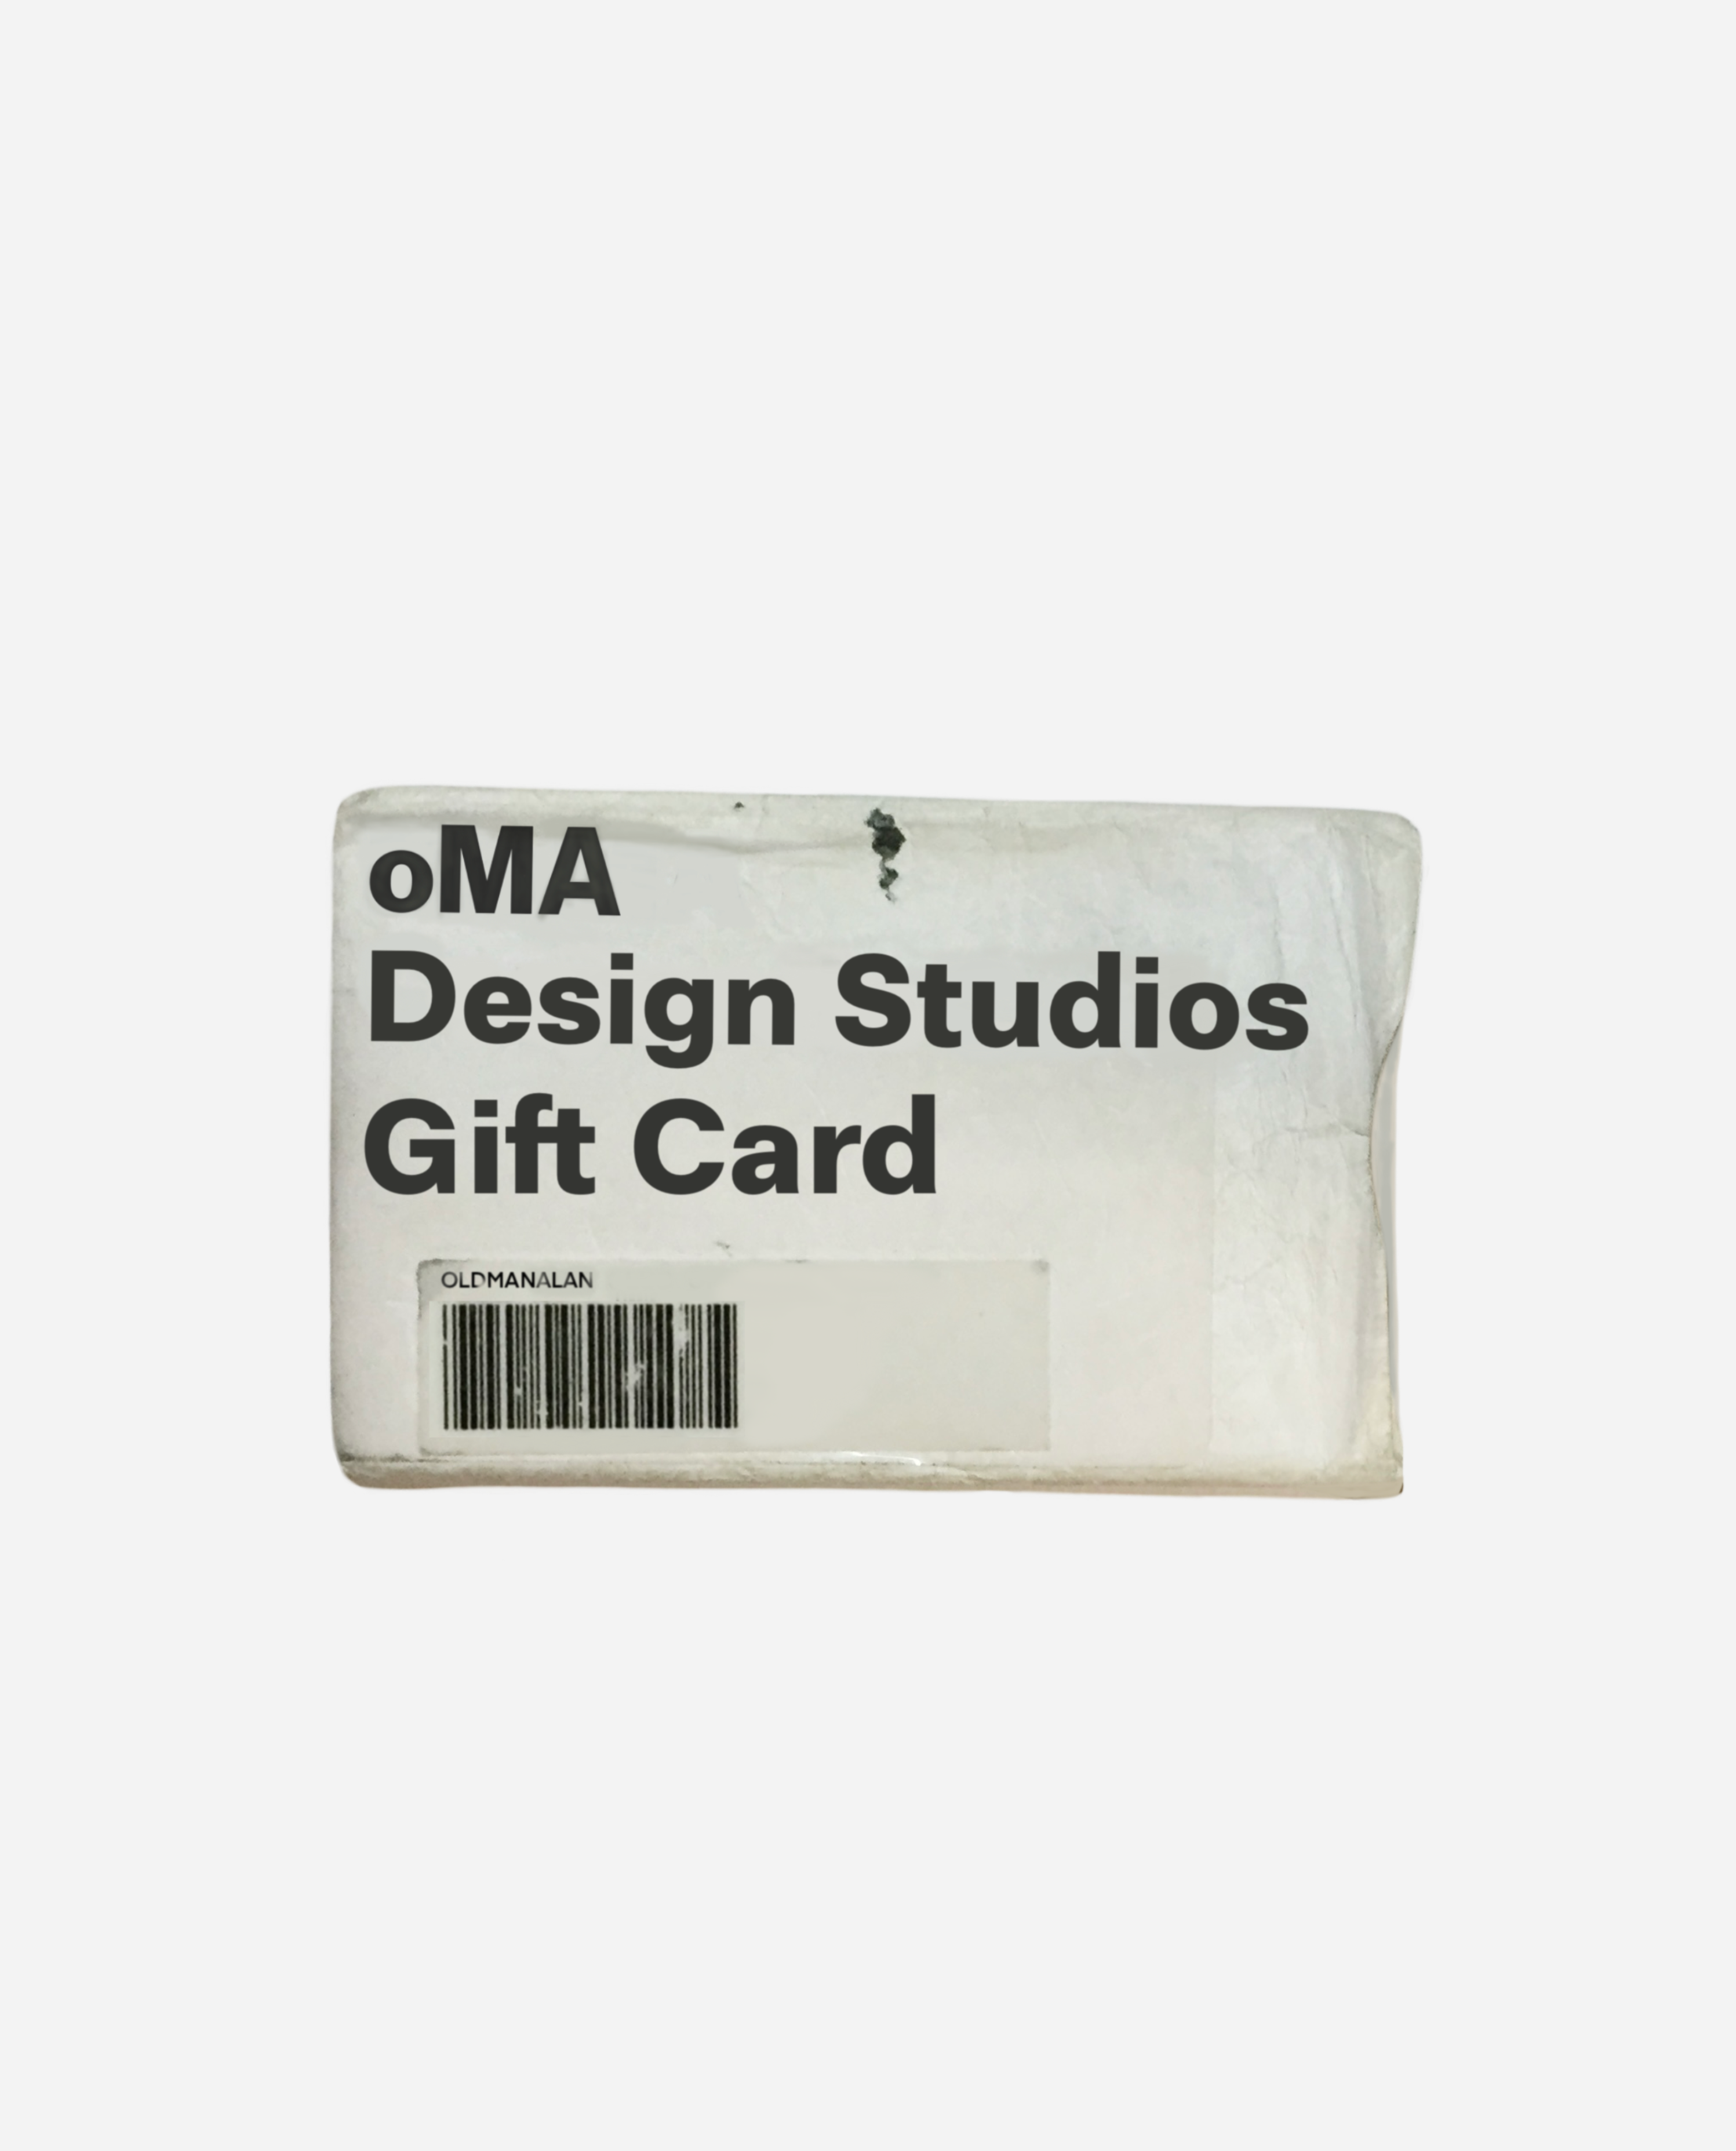 oMA DESIGN STUDIOS GIFT CARD